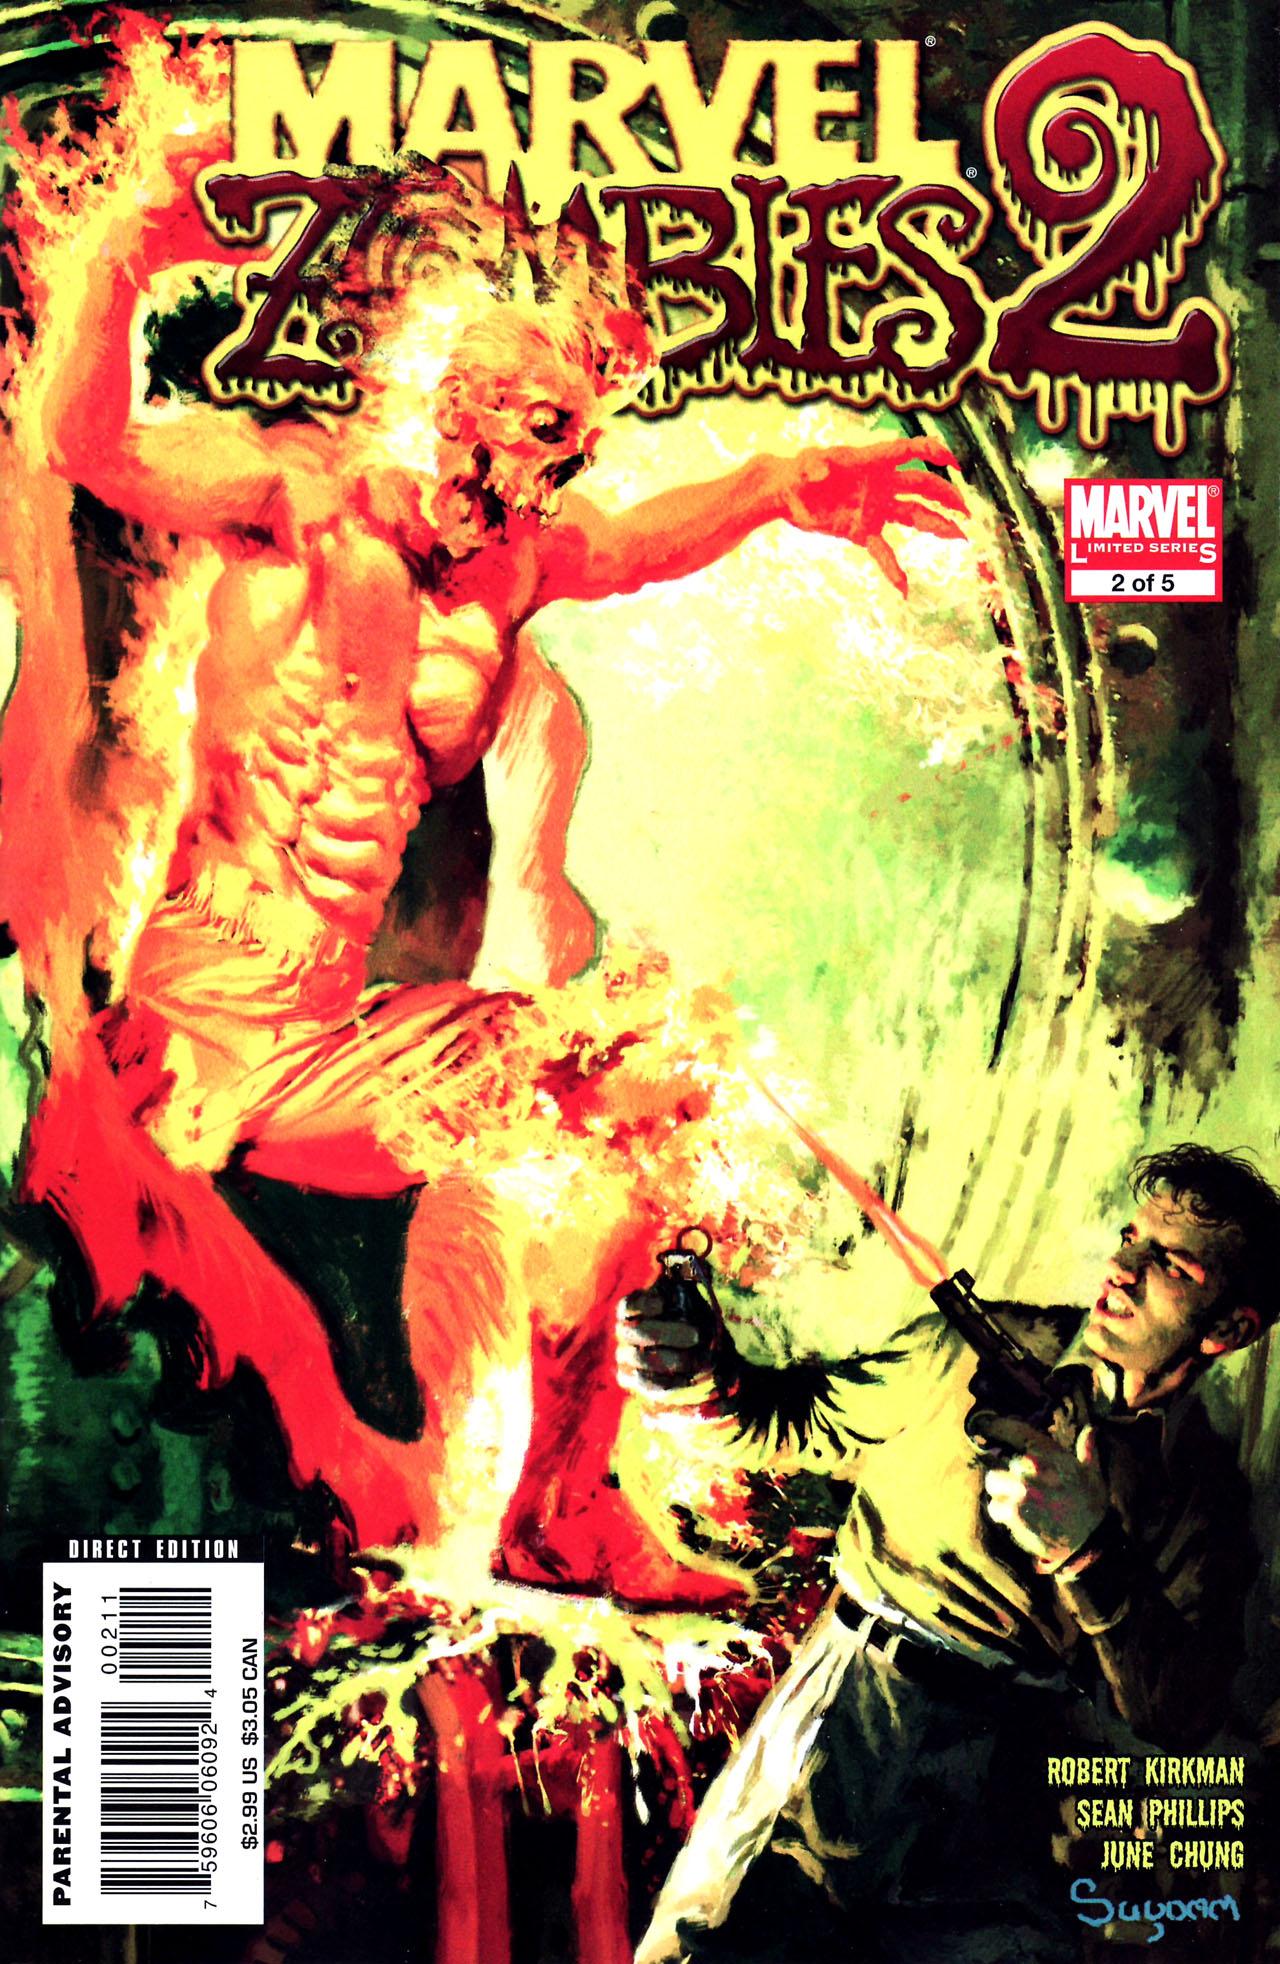 Marvel Zombies 2 Vol. 1 #2